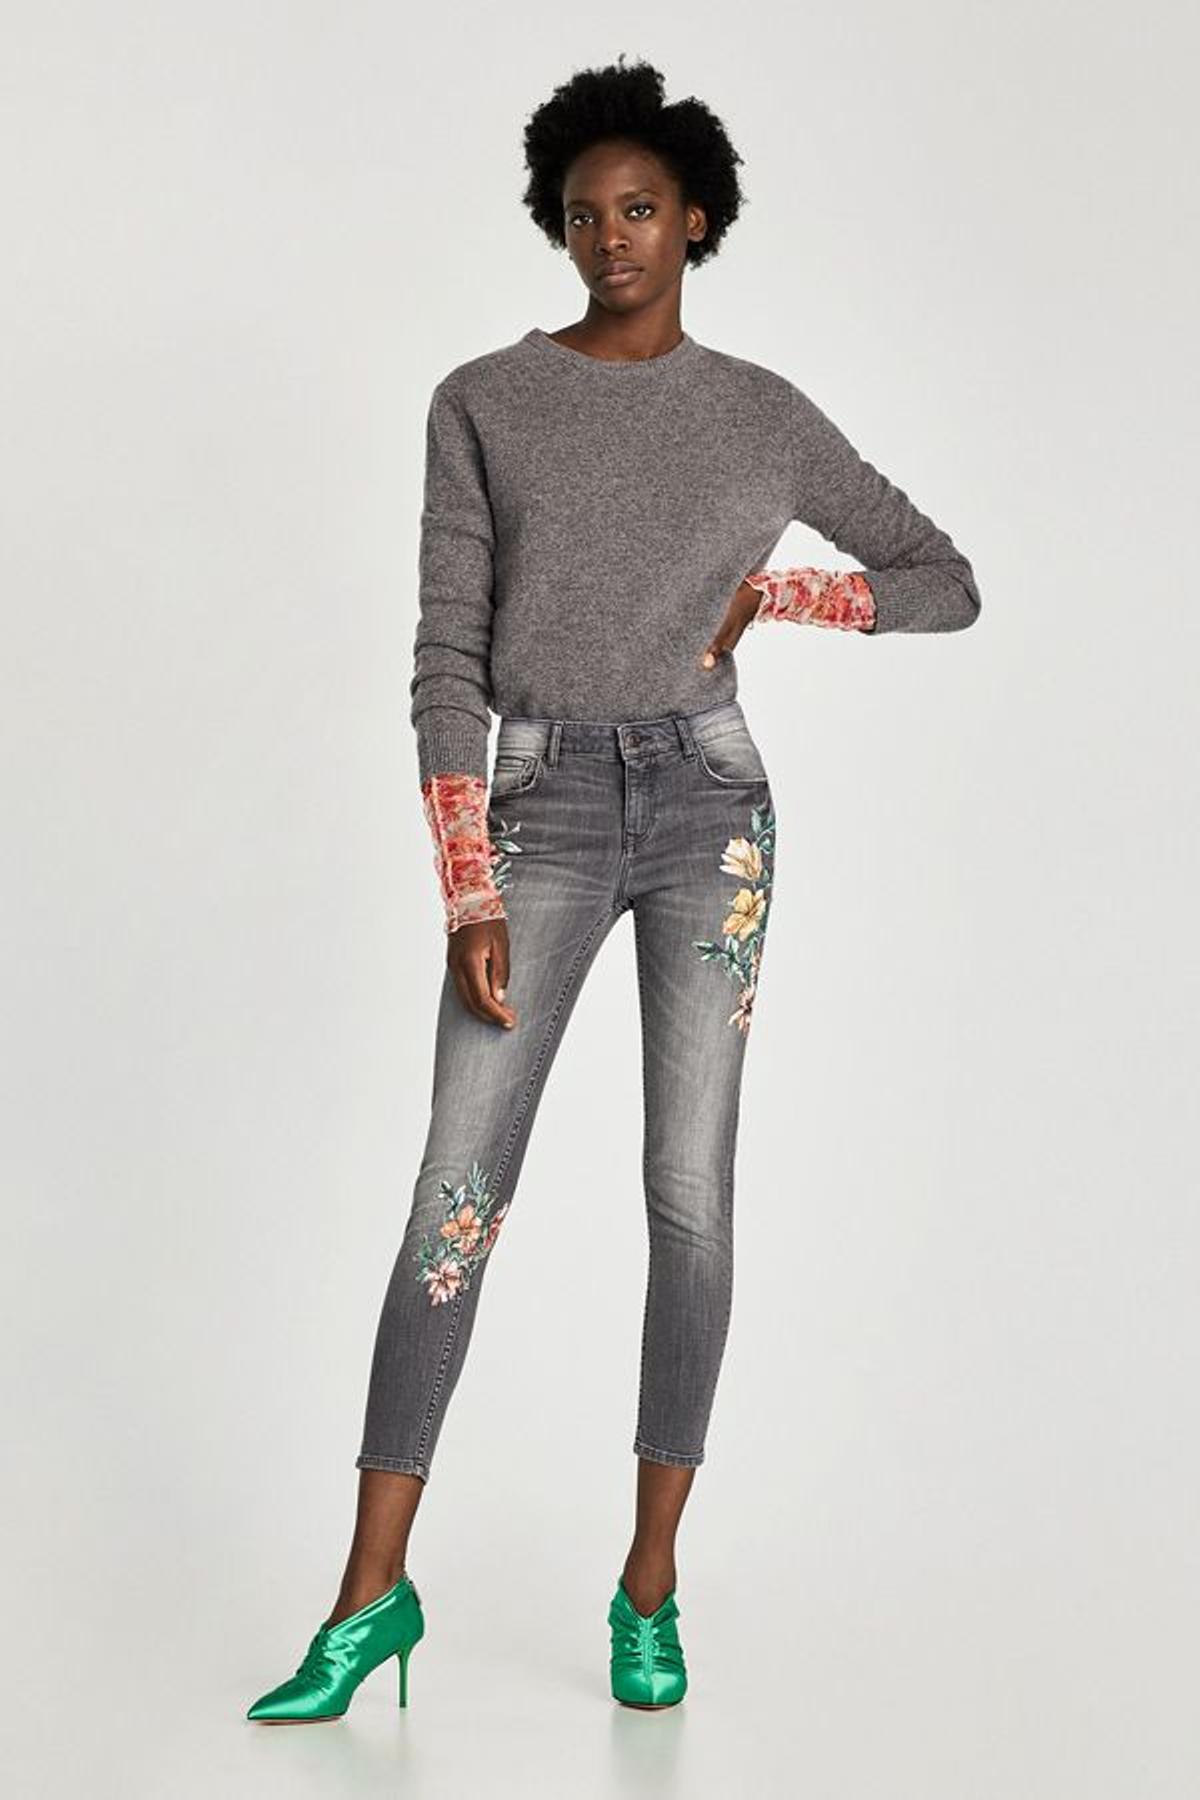 Rebajas en Zara: jeans bordados